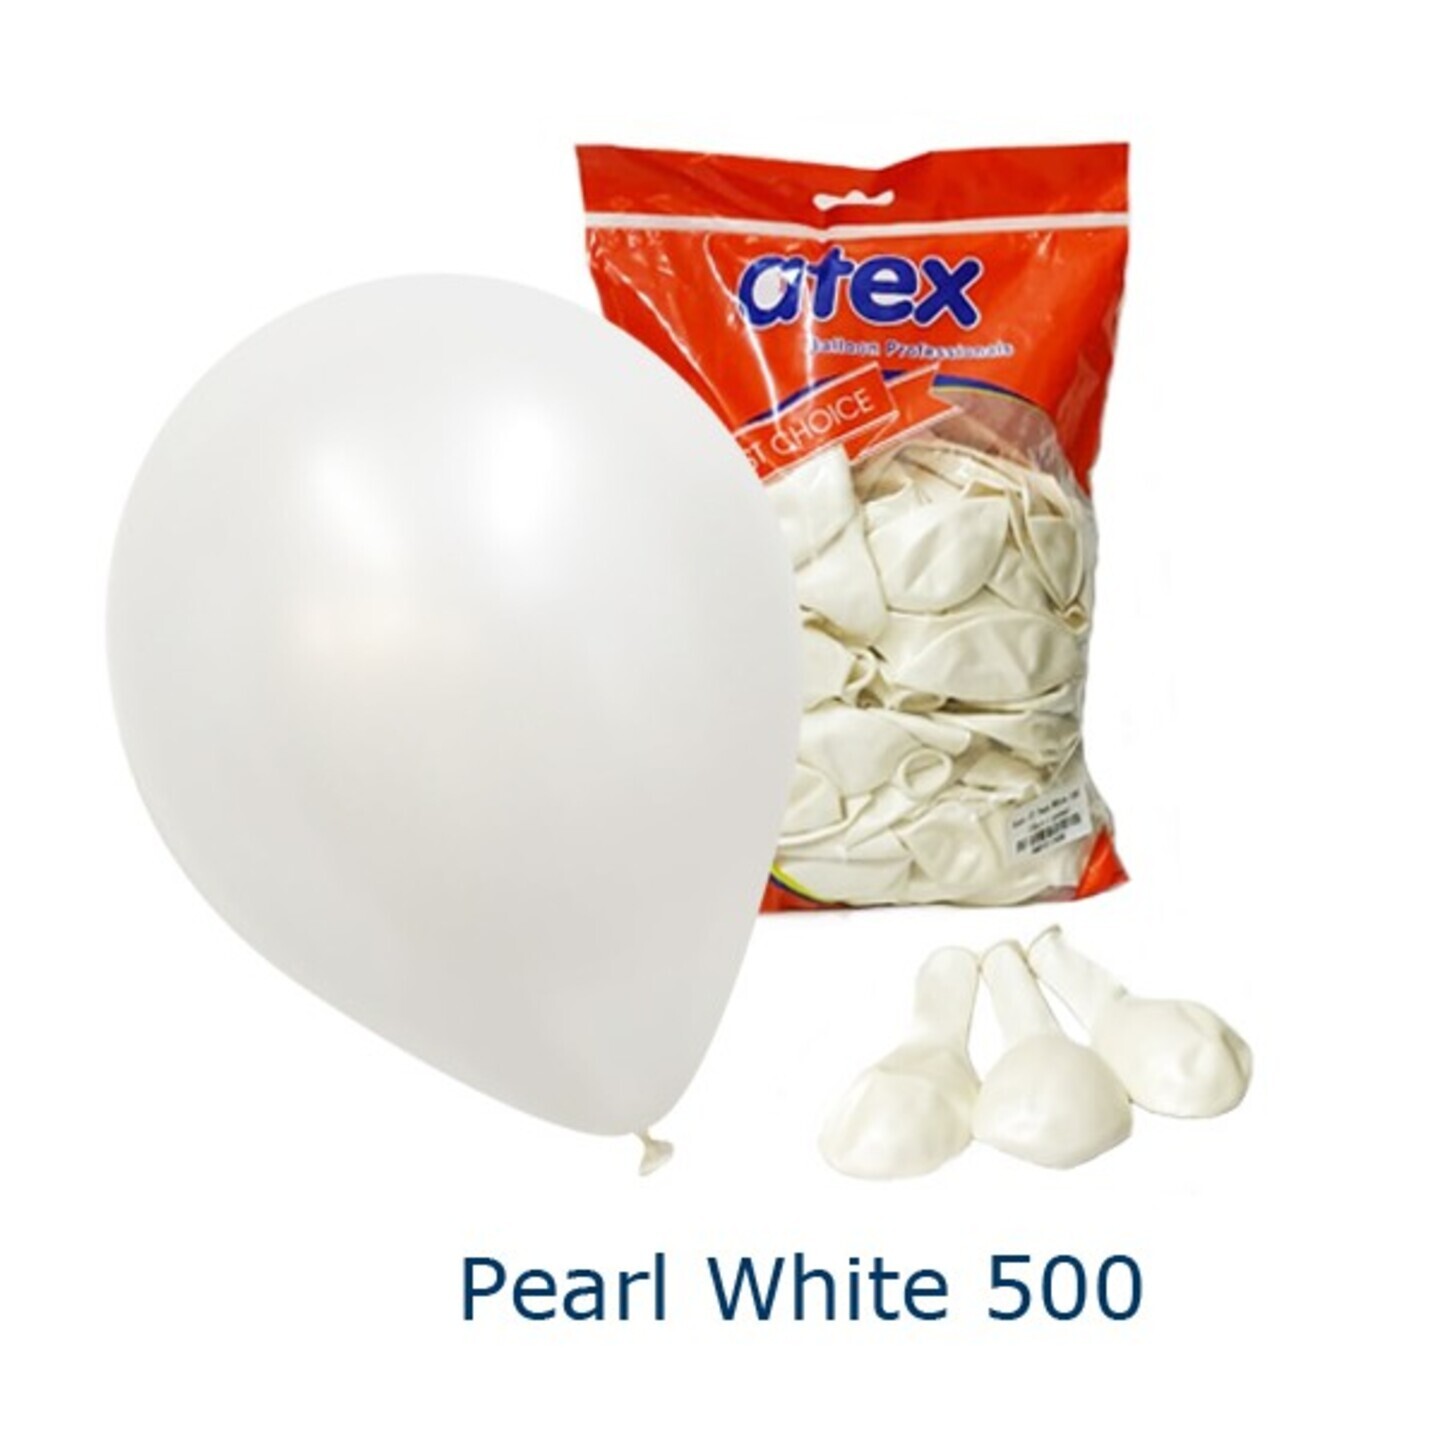 Pearl White 500